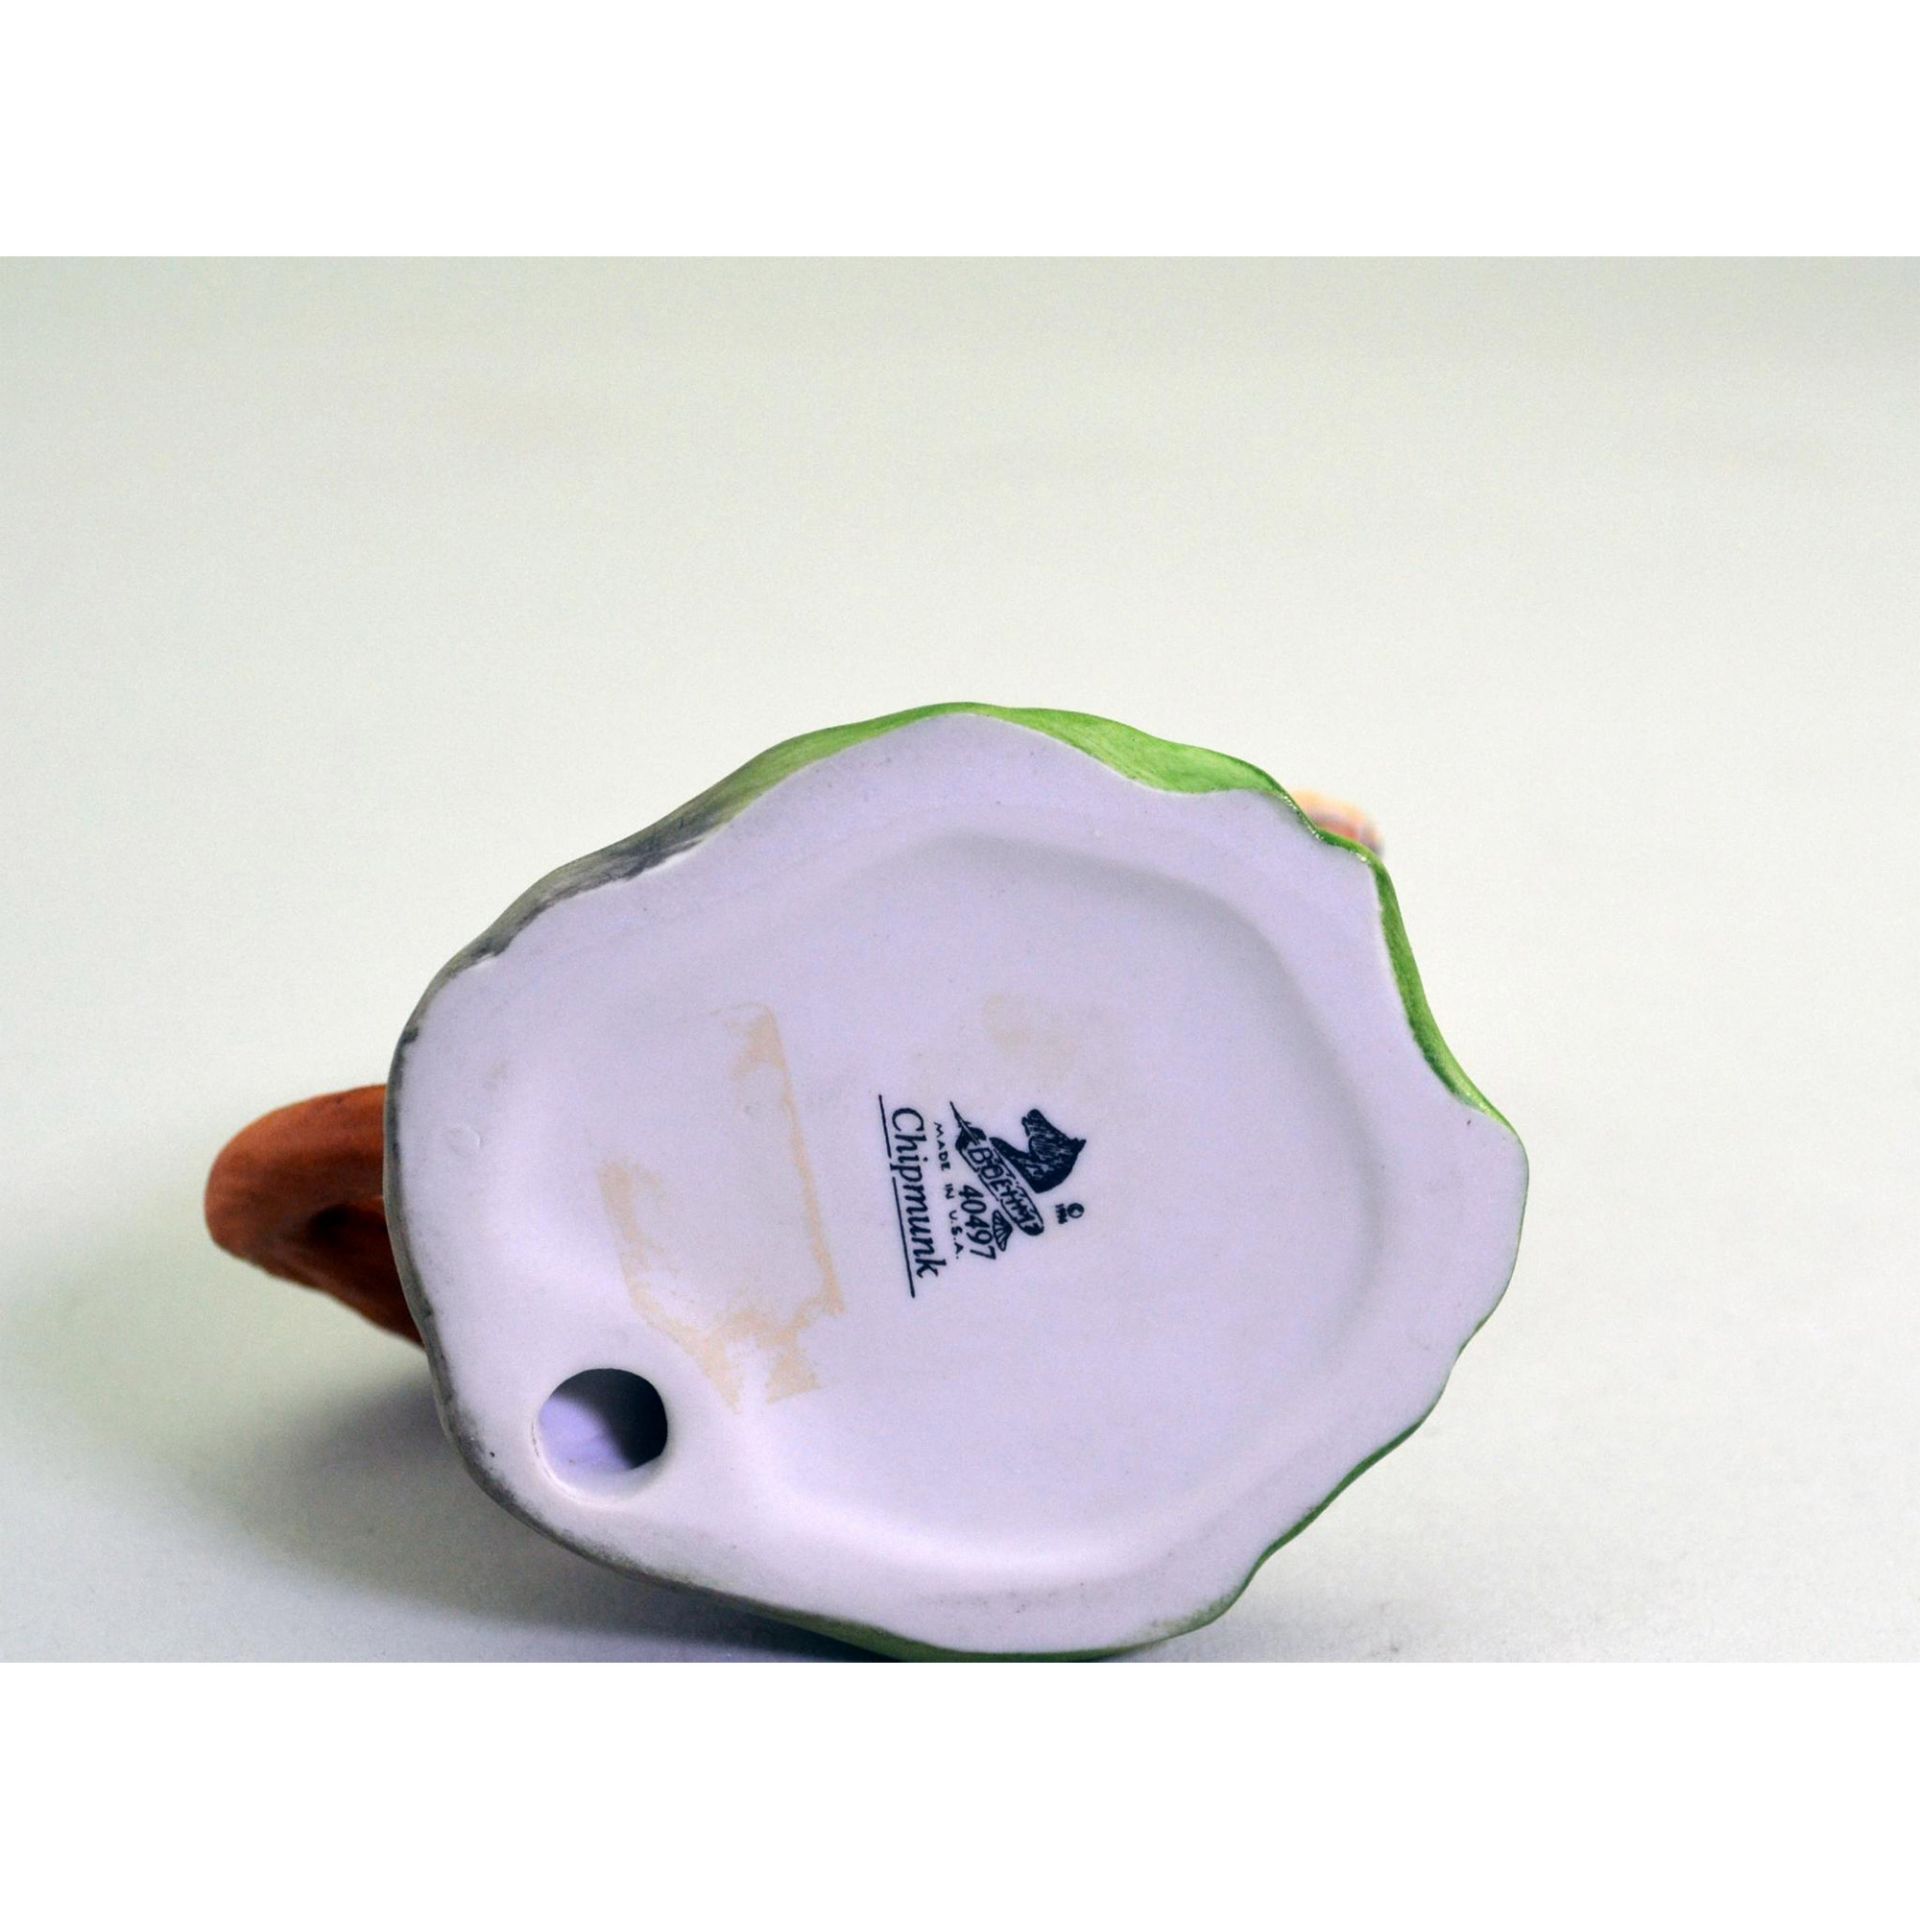 Boehm Porcelain Chipmunk Figurine - Image 4 of 4